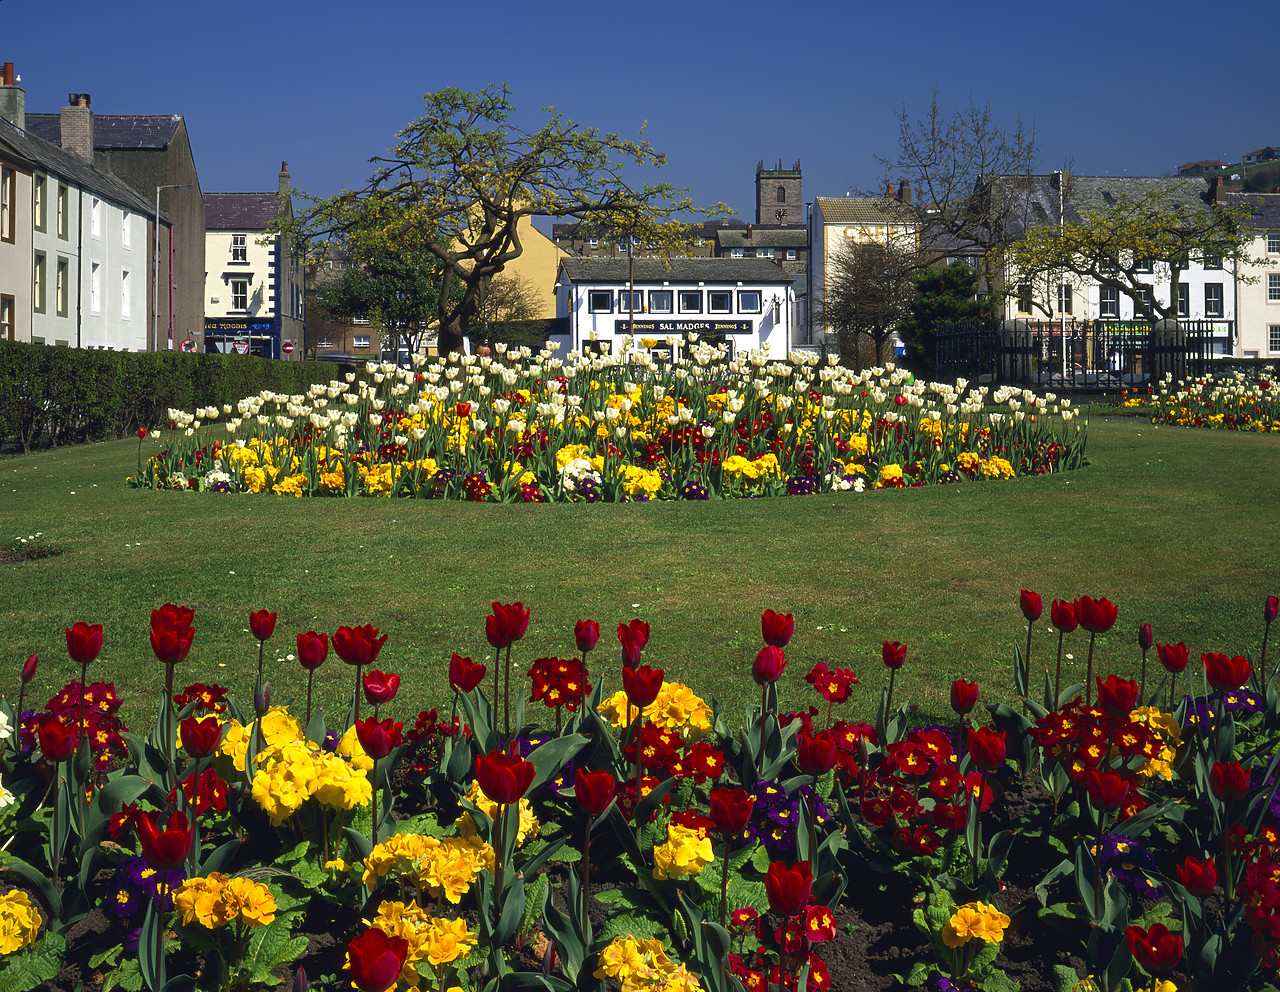 #970207-1 - Tulip Gardens, Whitehaven, Cumbria, England